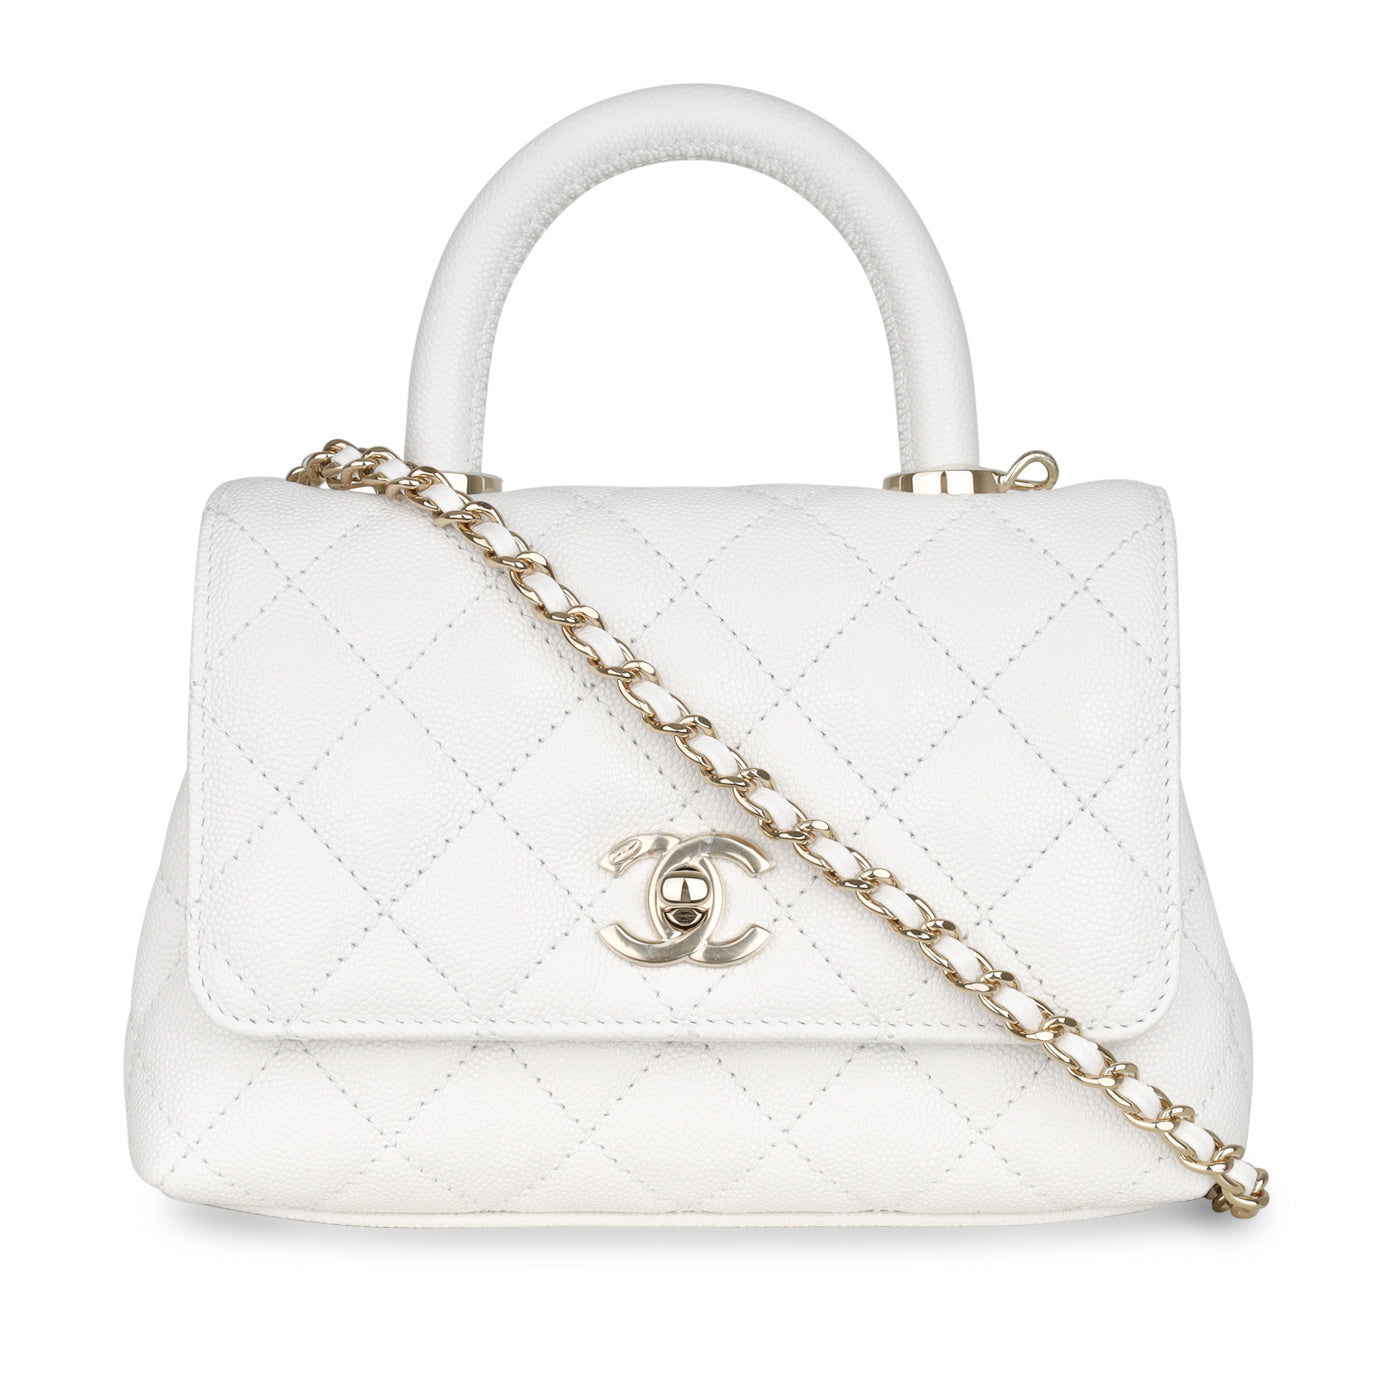 Chanel coco womens handbag - Gem